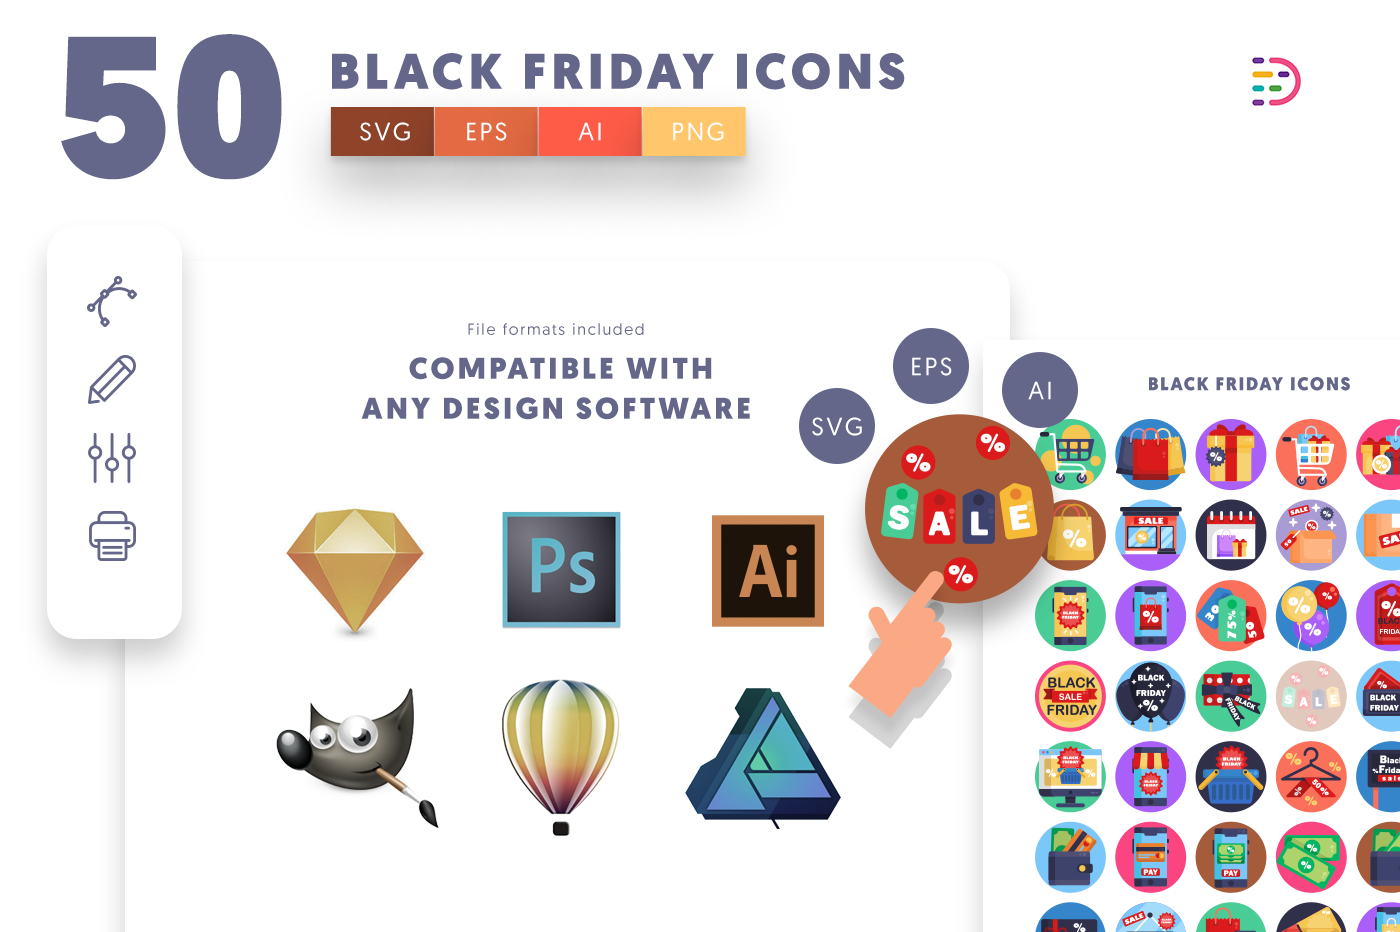  full vector Black Friday Icons 